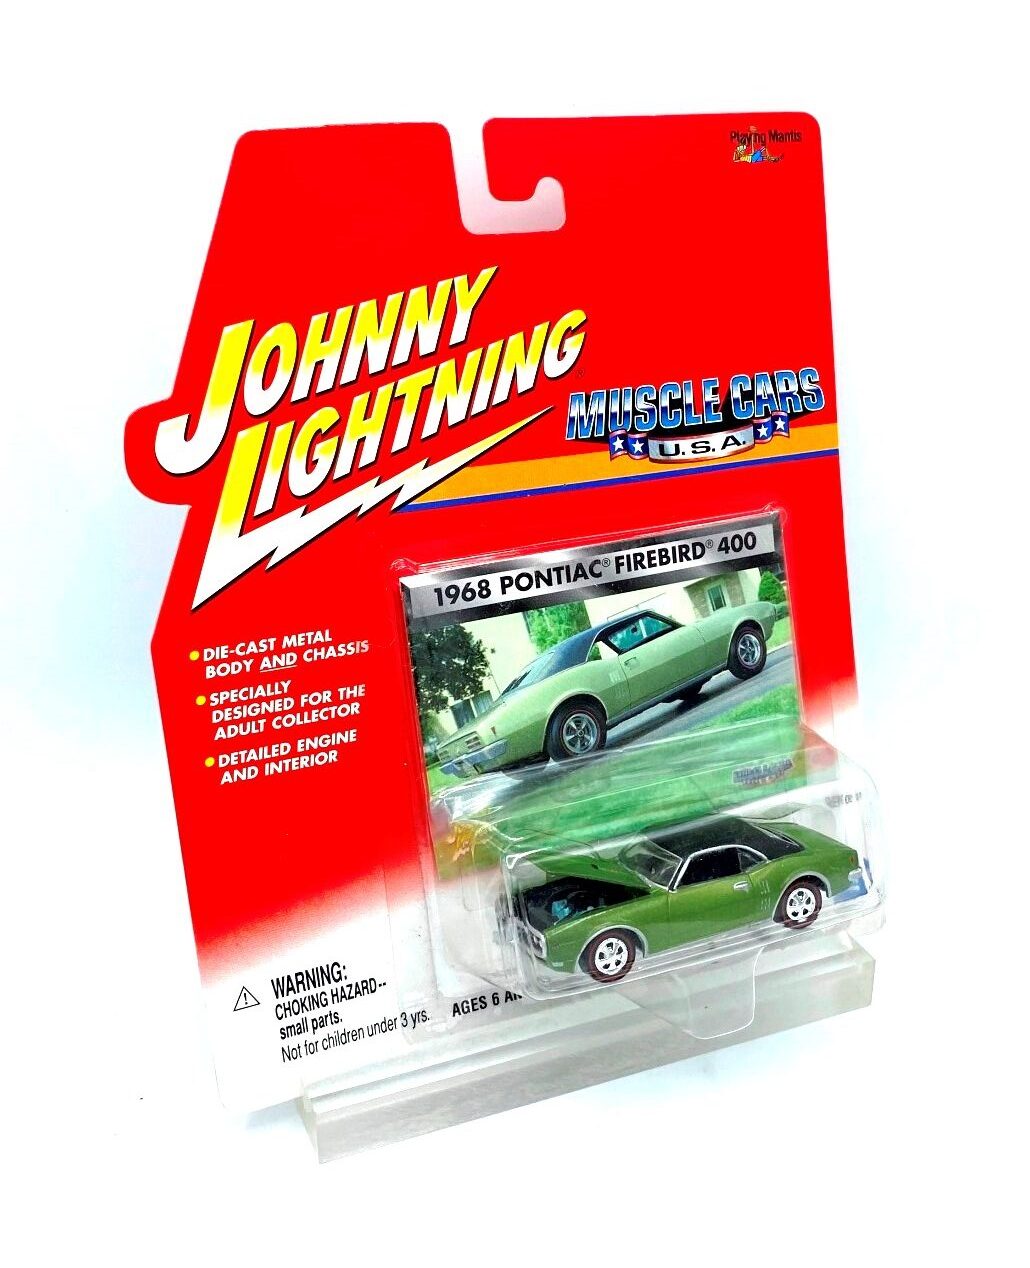 Johnny Lightning Thirteen 13 Customs 1969 Shelby Gt500 for sale online